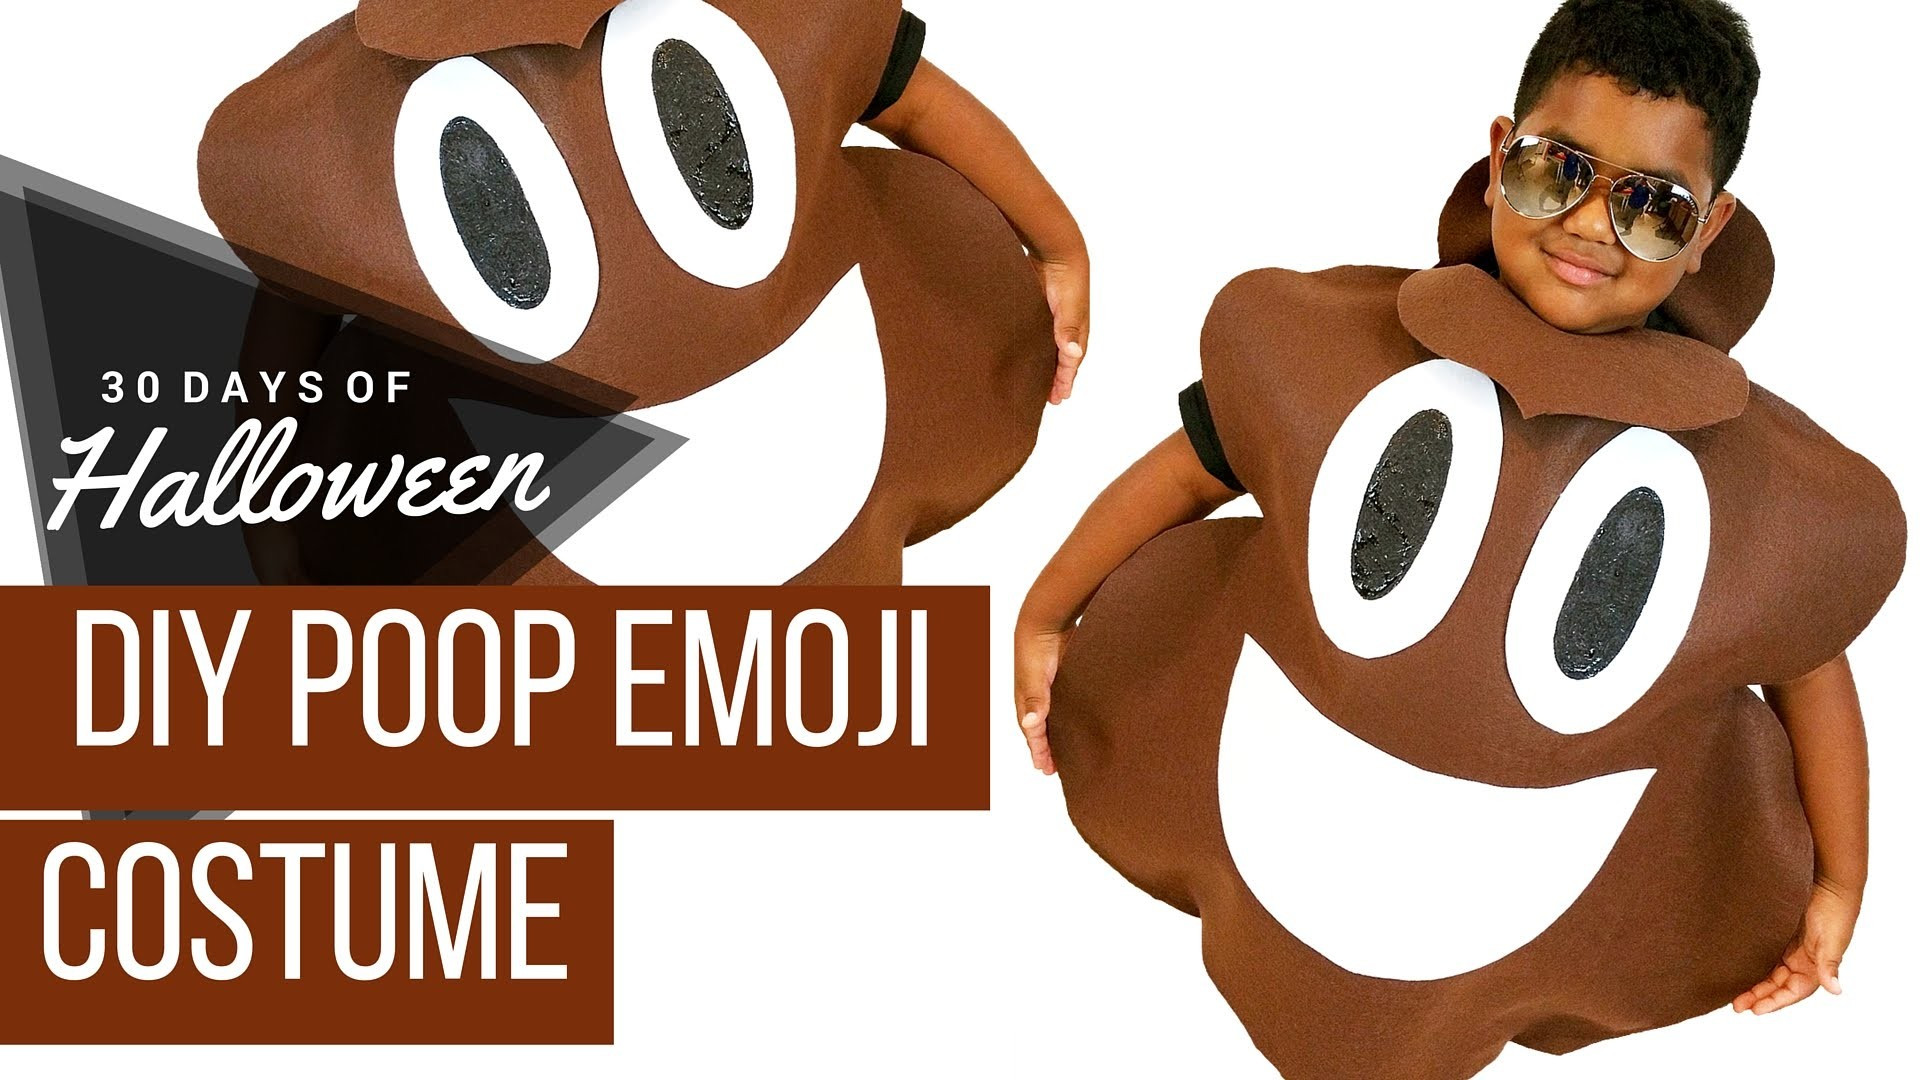 Poop Emoji Costume DIY
 DIY Poop Emoji Costume JPHalloween 30 Days of Halloween